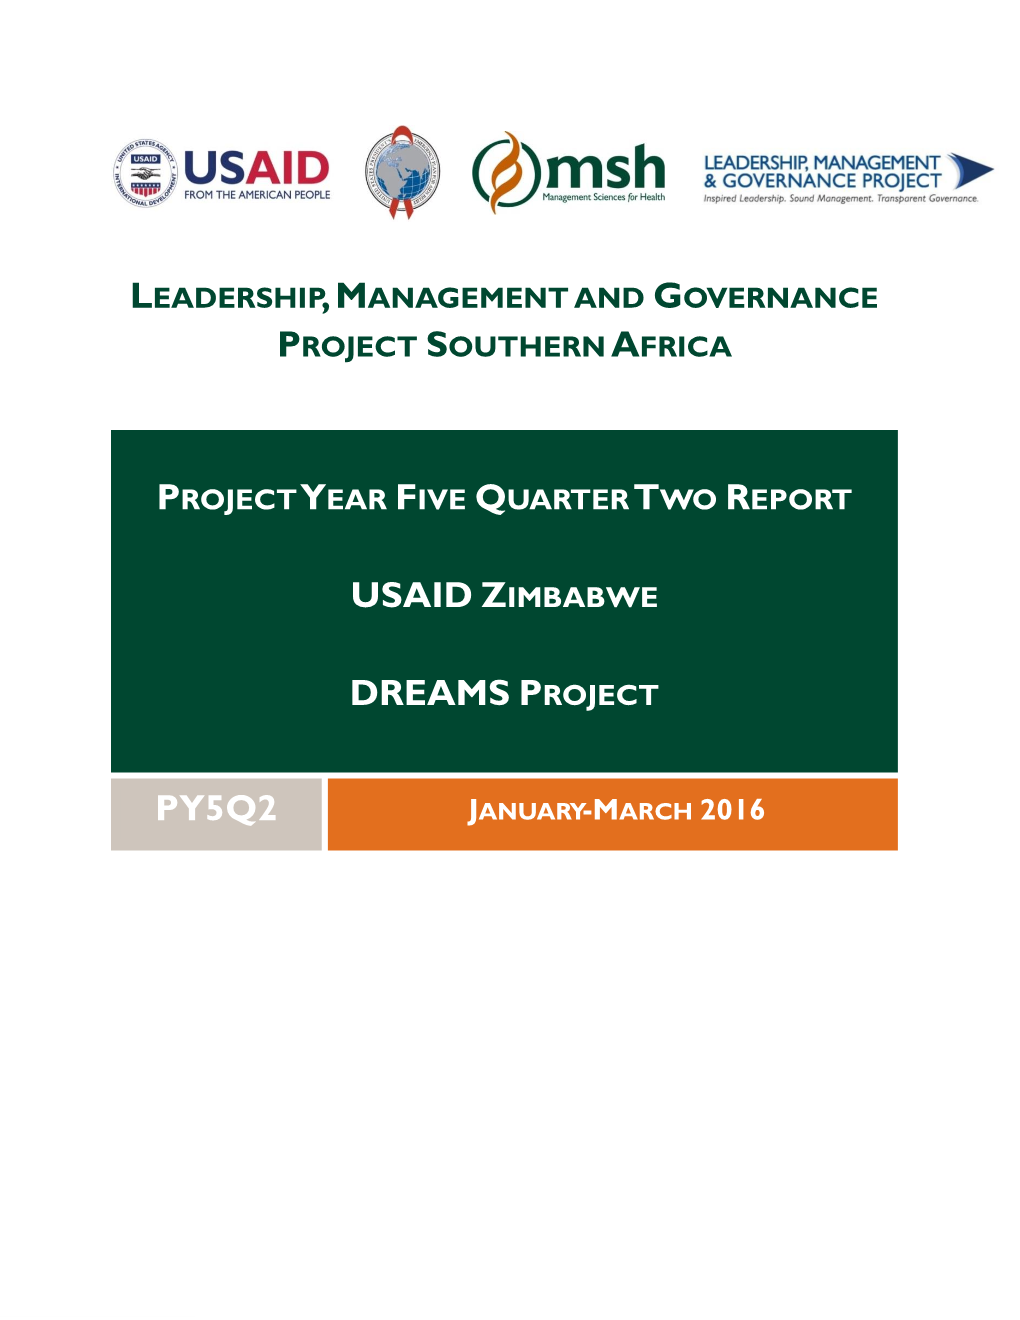 Zimbabwe Dreams – Partnership with Africaid-Zvandiri